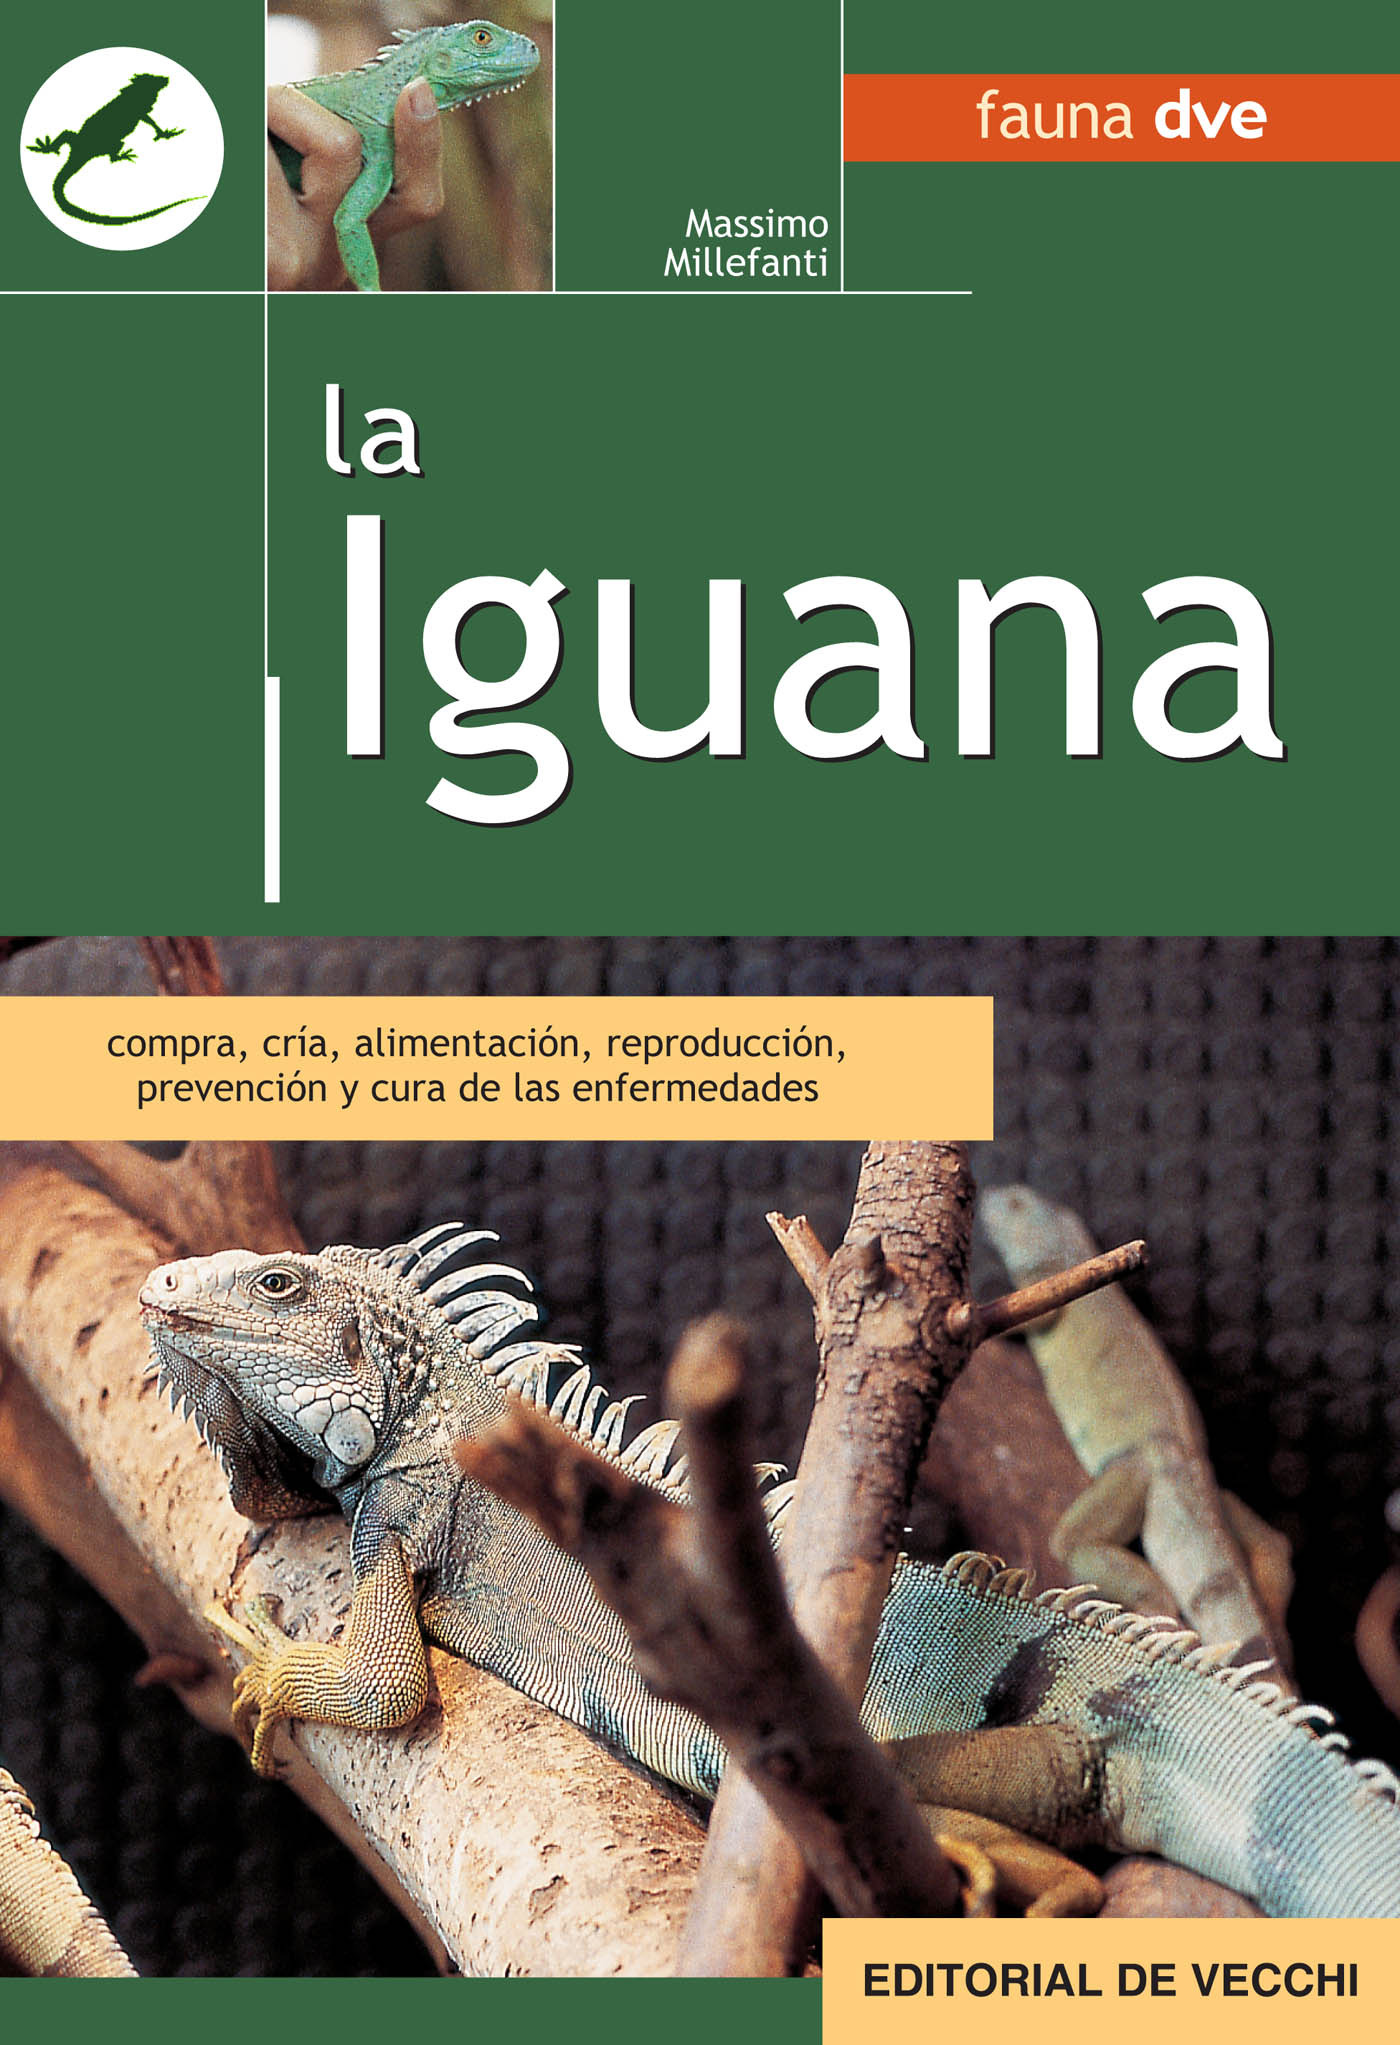 Millefanti, Massimo - La iguana, ebook